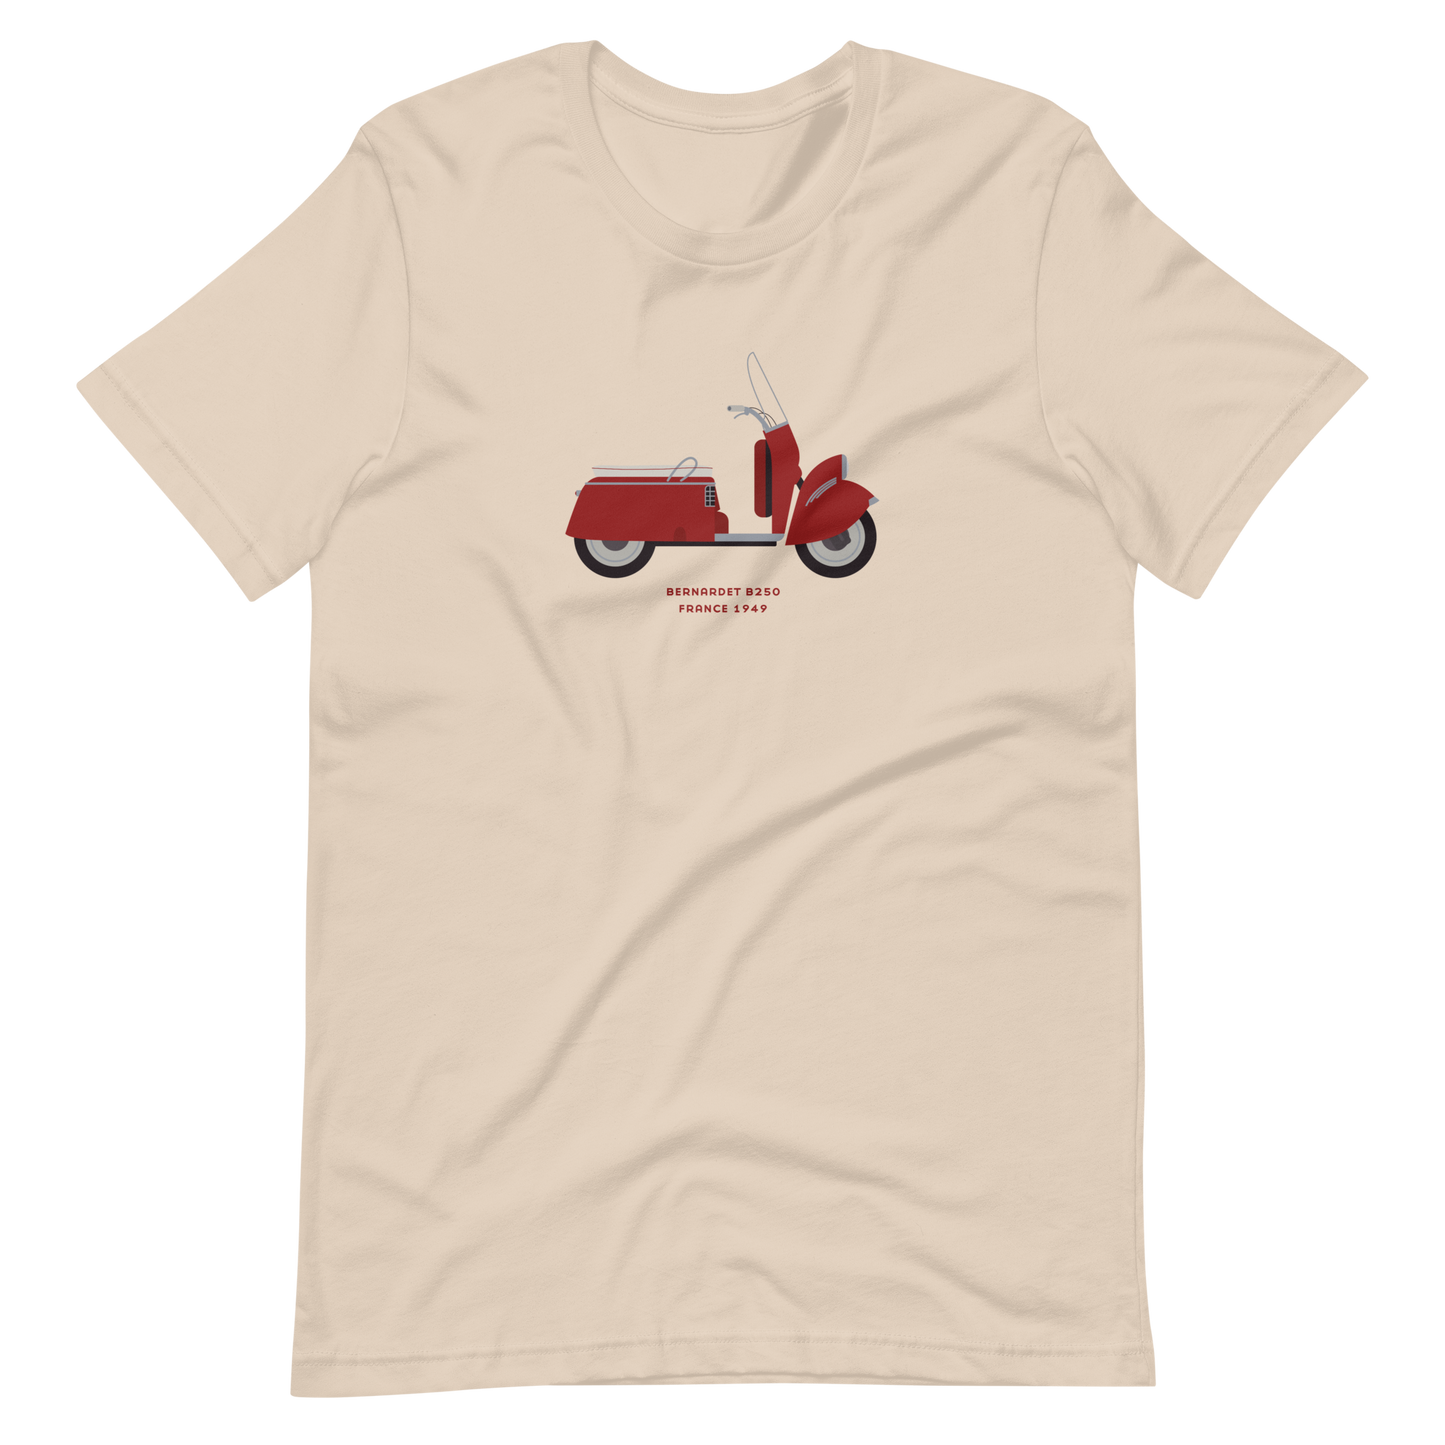 T-Shirt Scooter Bernardet B250, France 1949